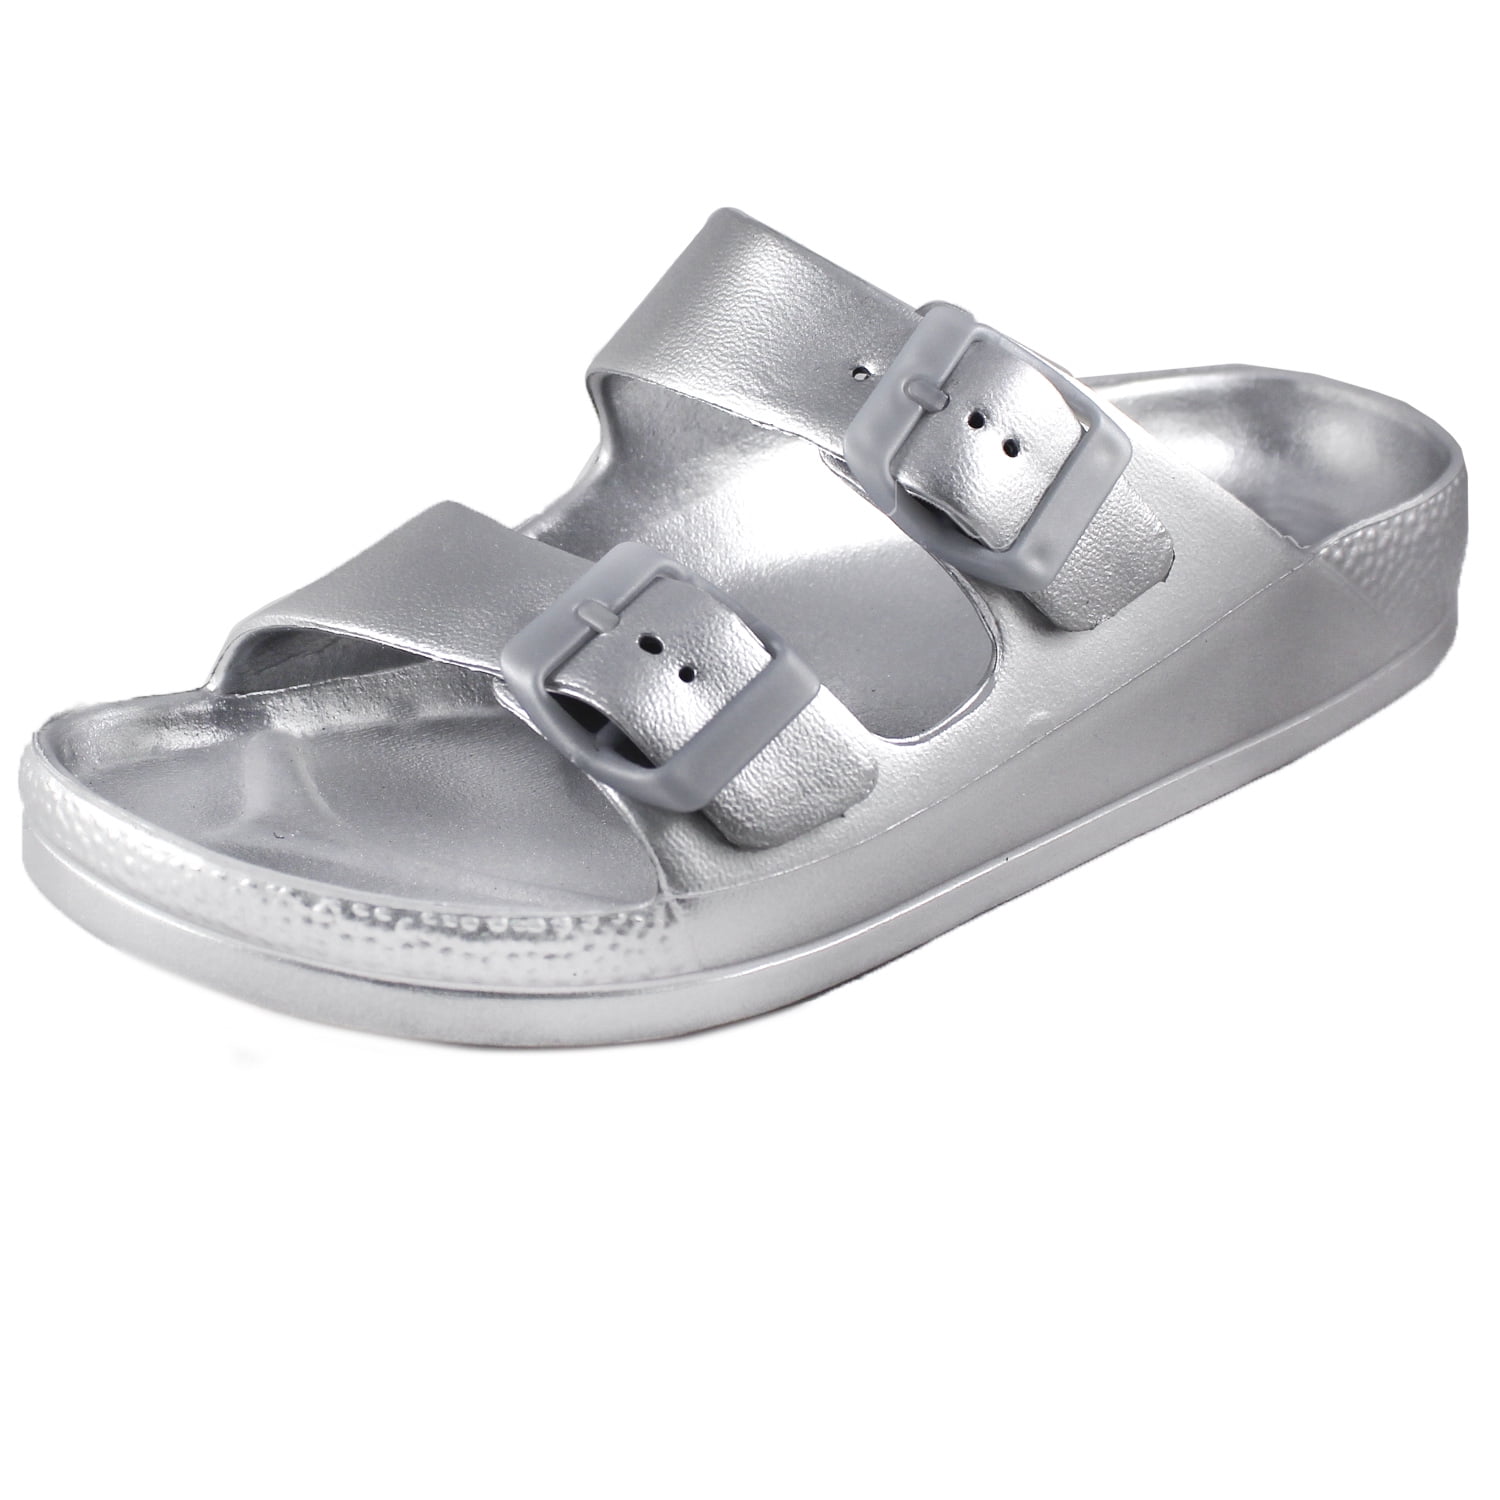 silver sandals near me